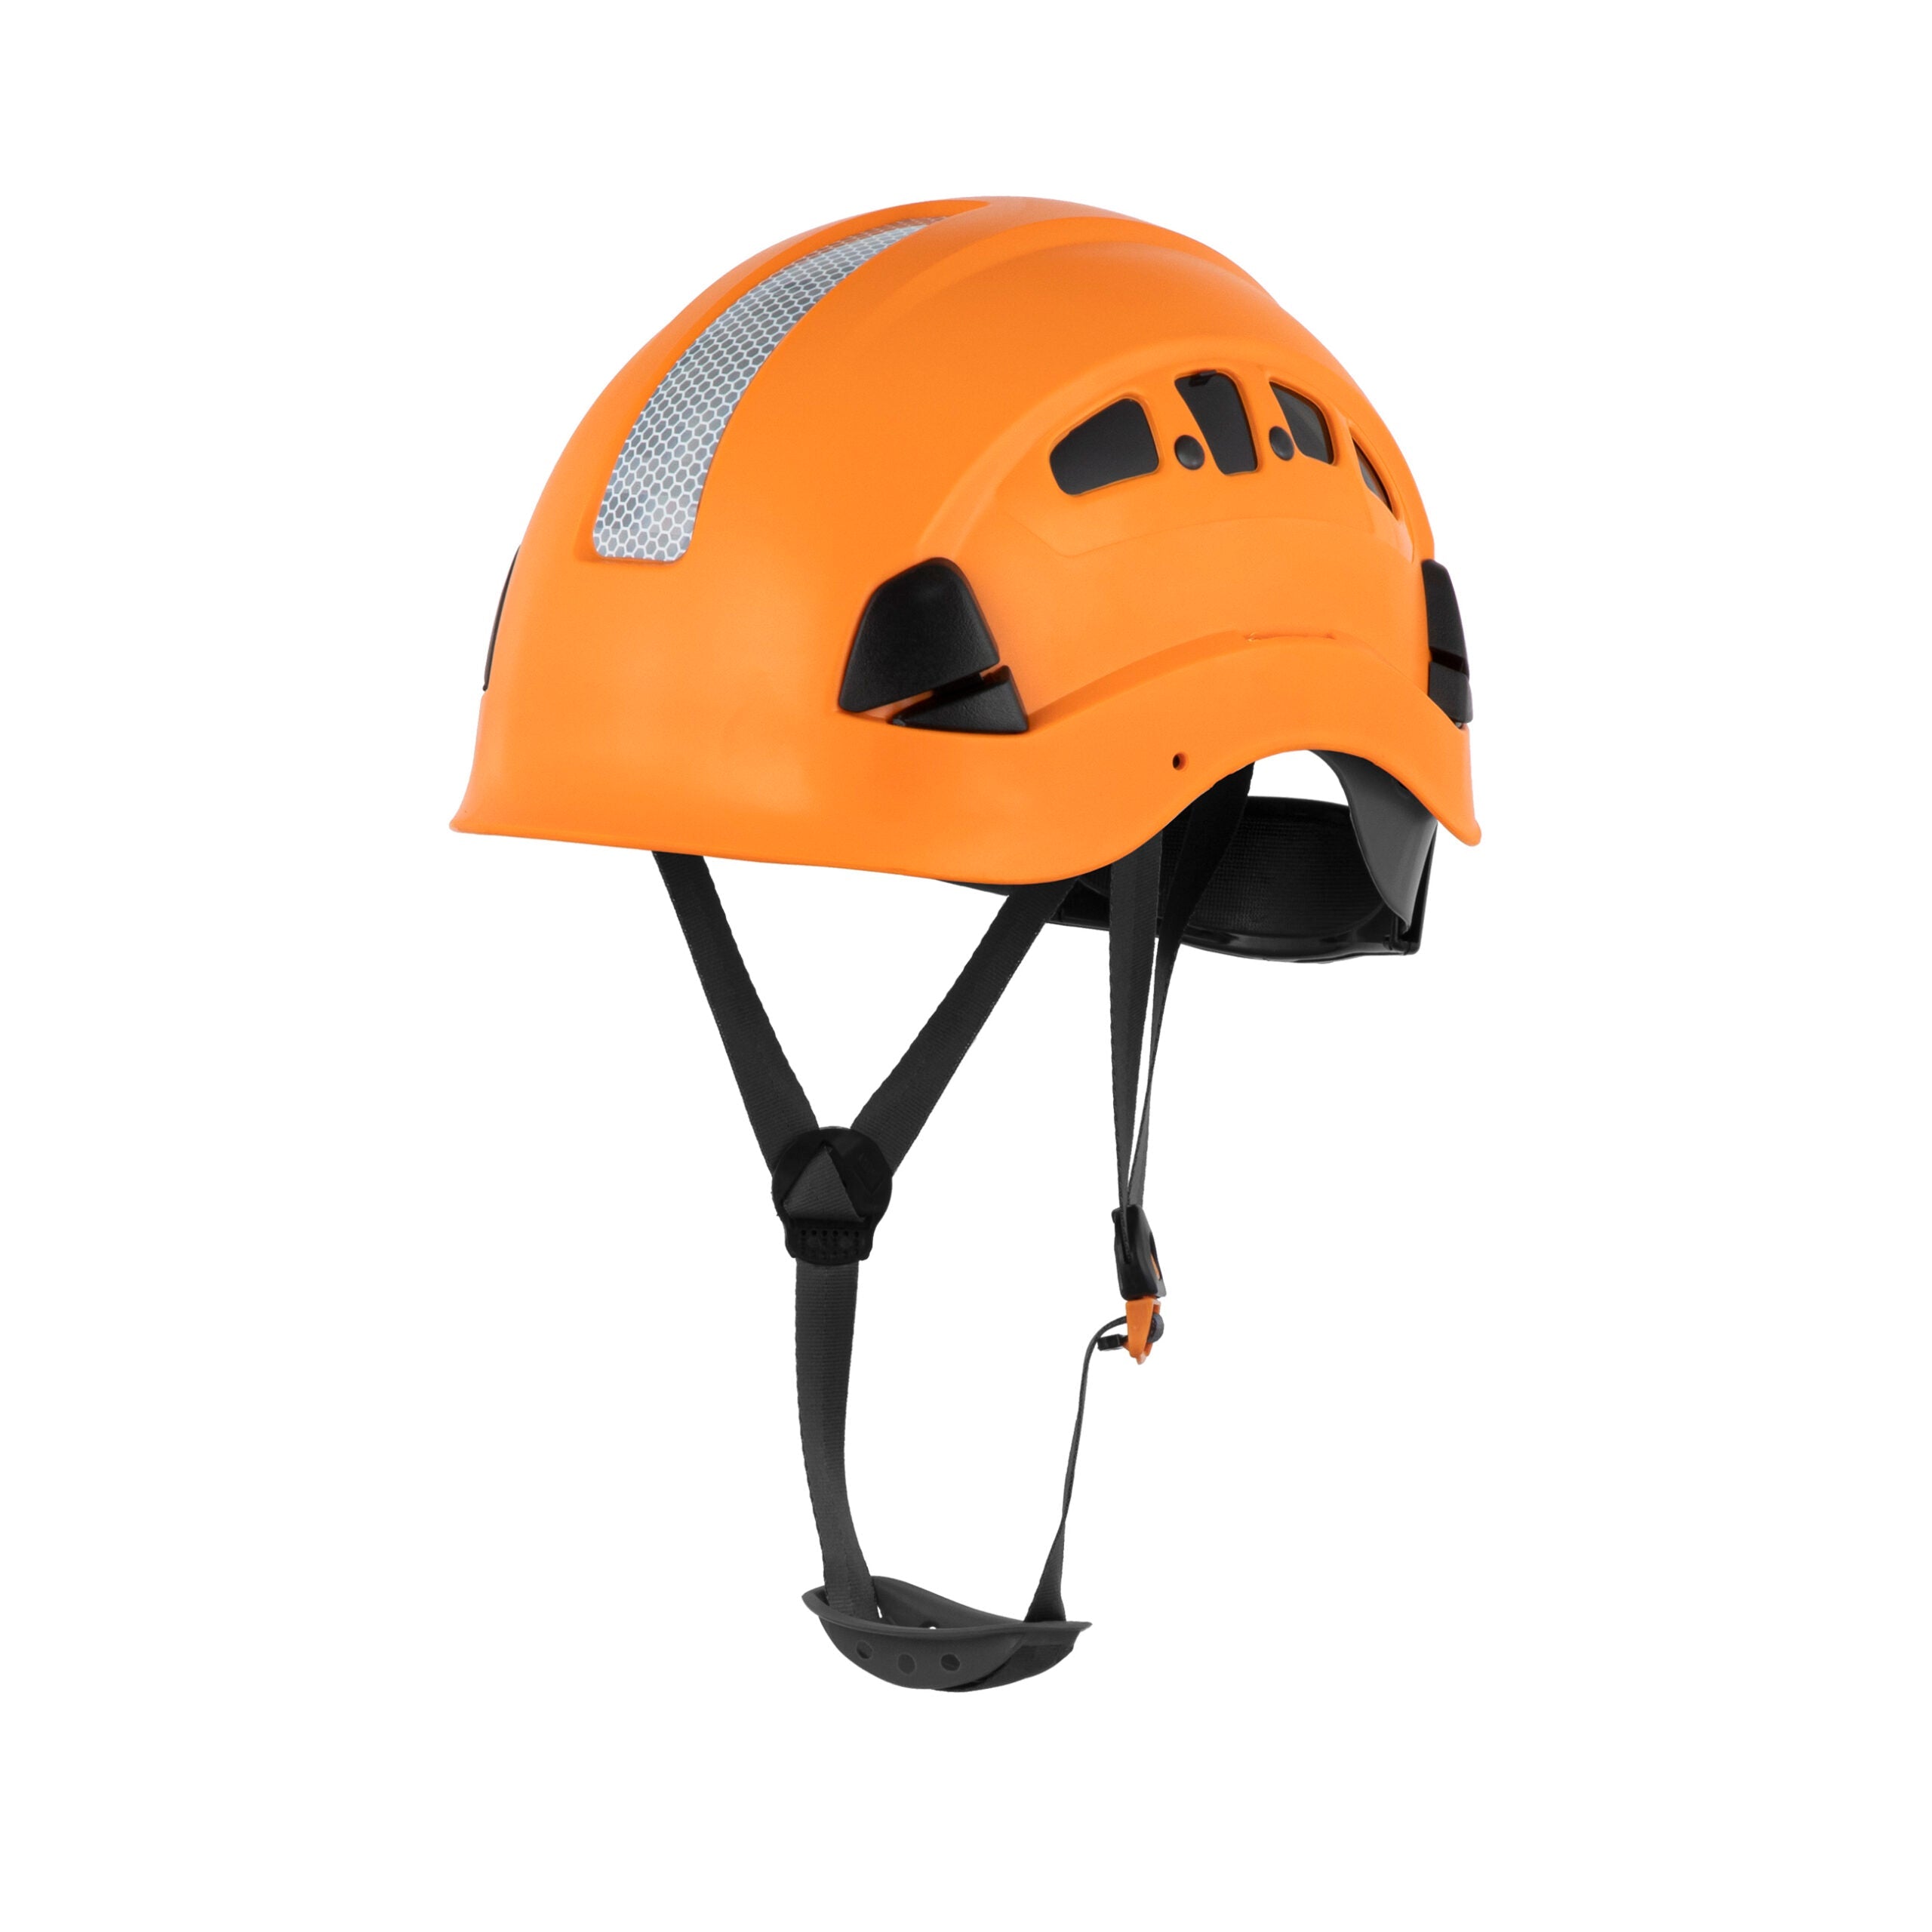 H1-CH Safety Helmet Type 1, Class C, ANSI Z89 & en 397 Rated (Color: Orange)